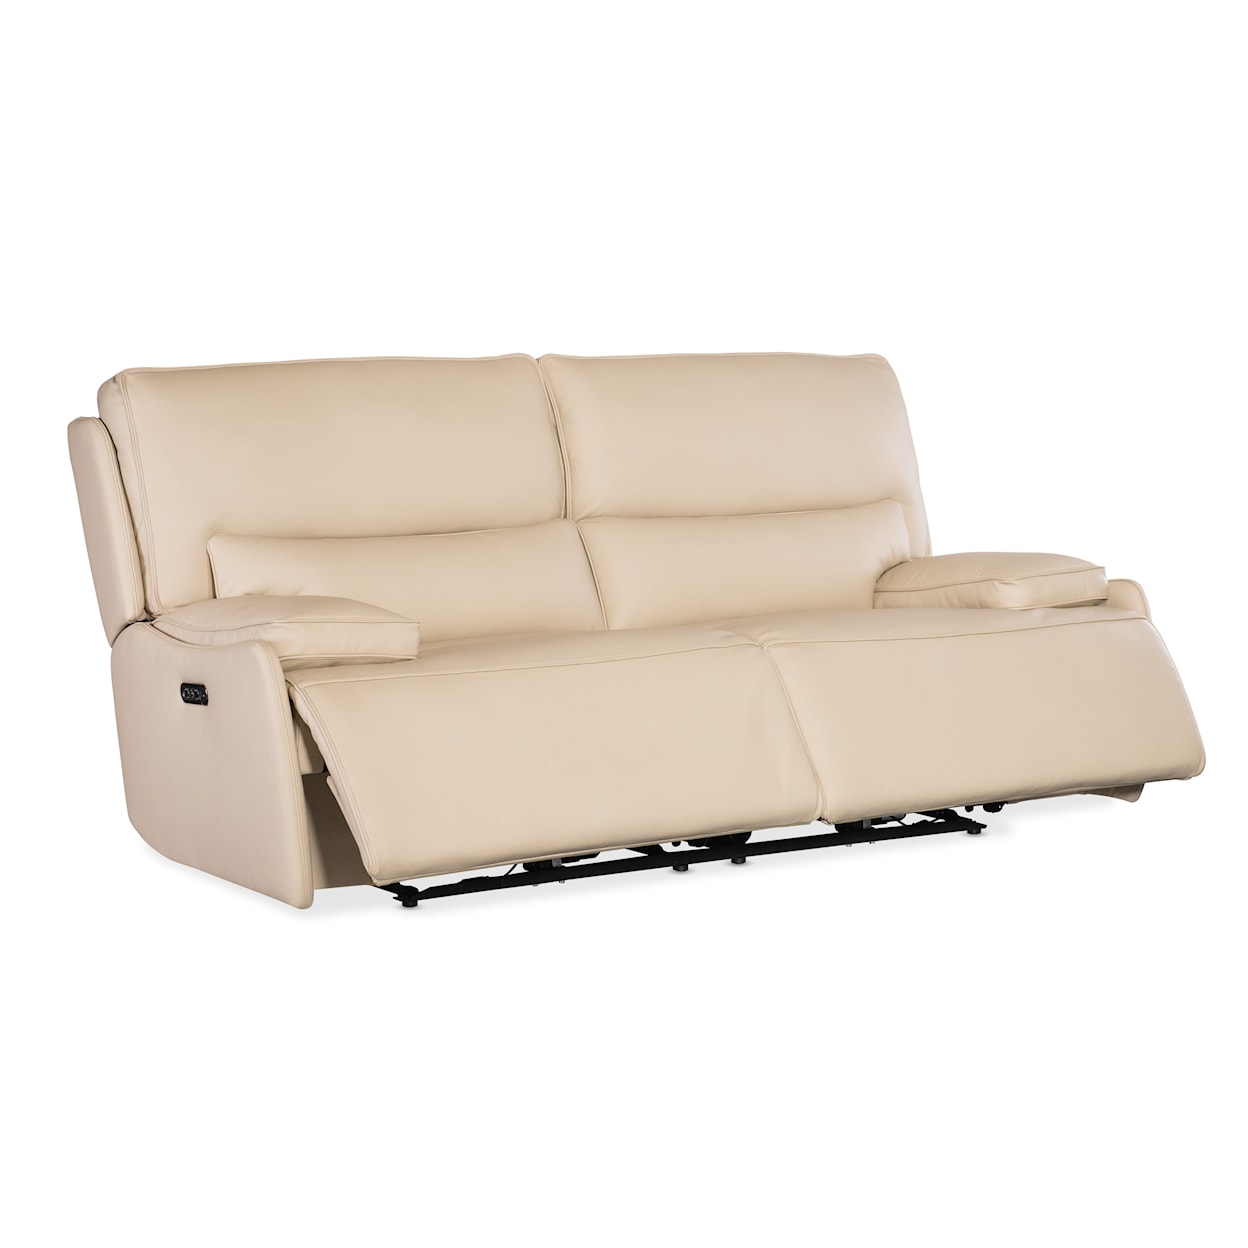 Hooker Furniture MS Power Reclining Sofa